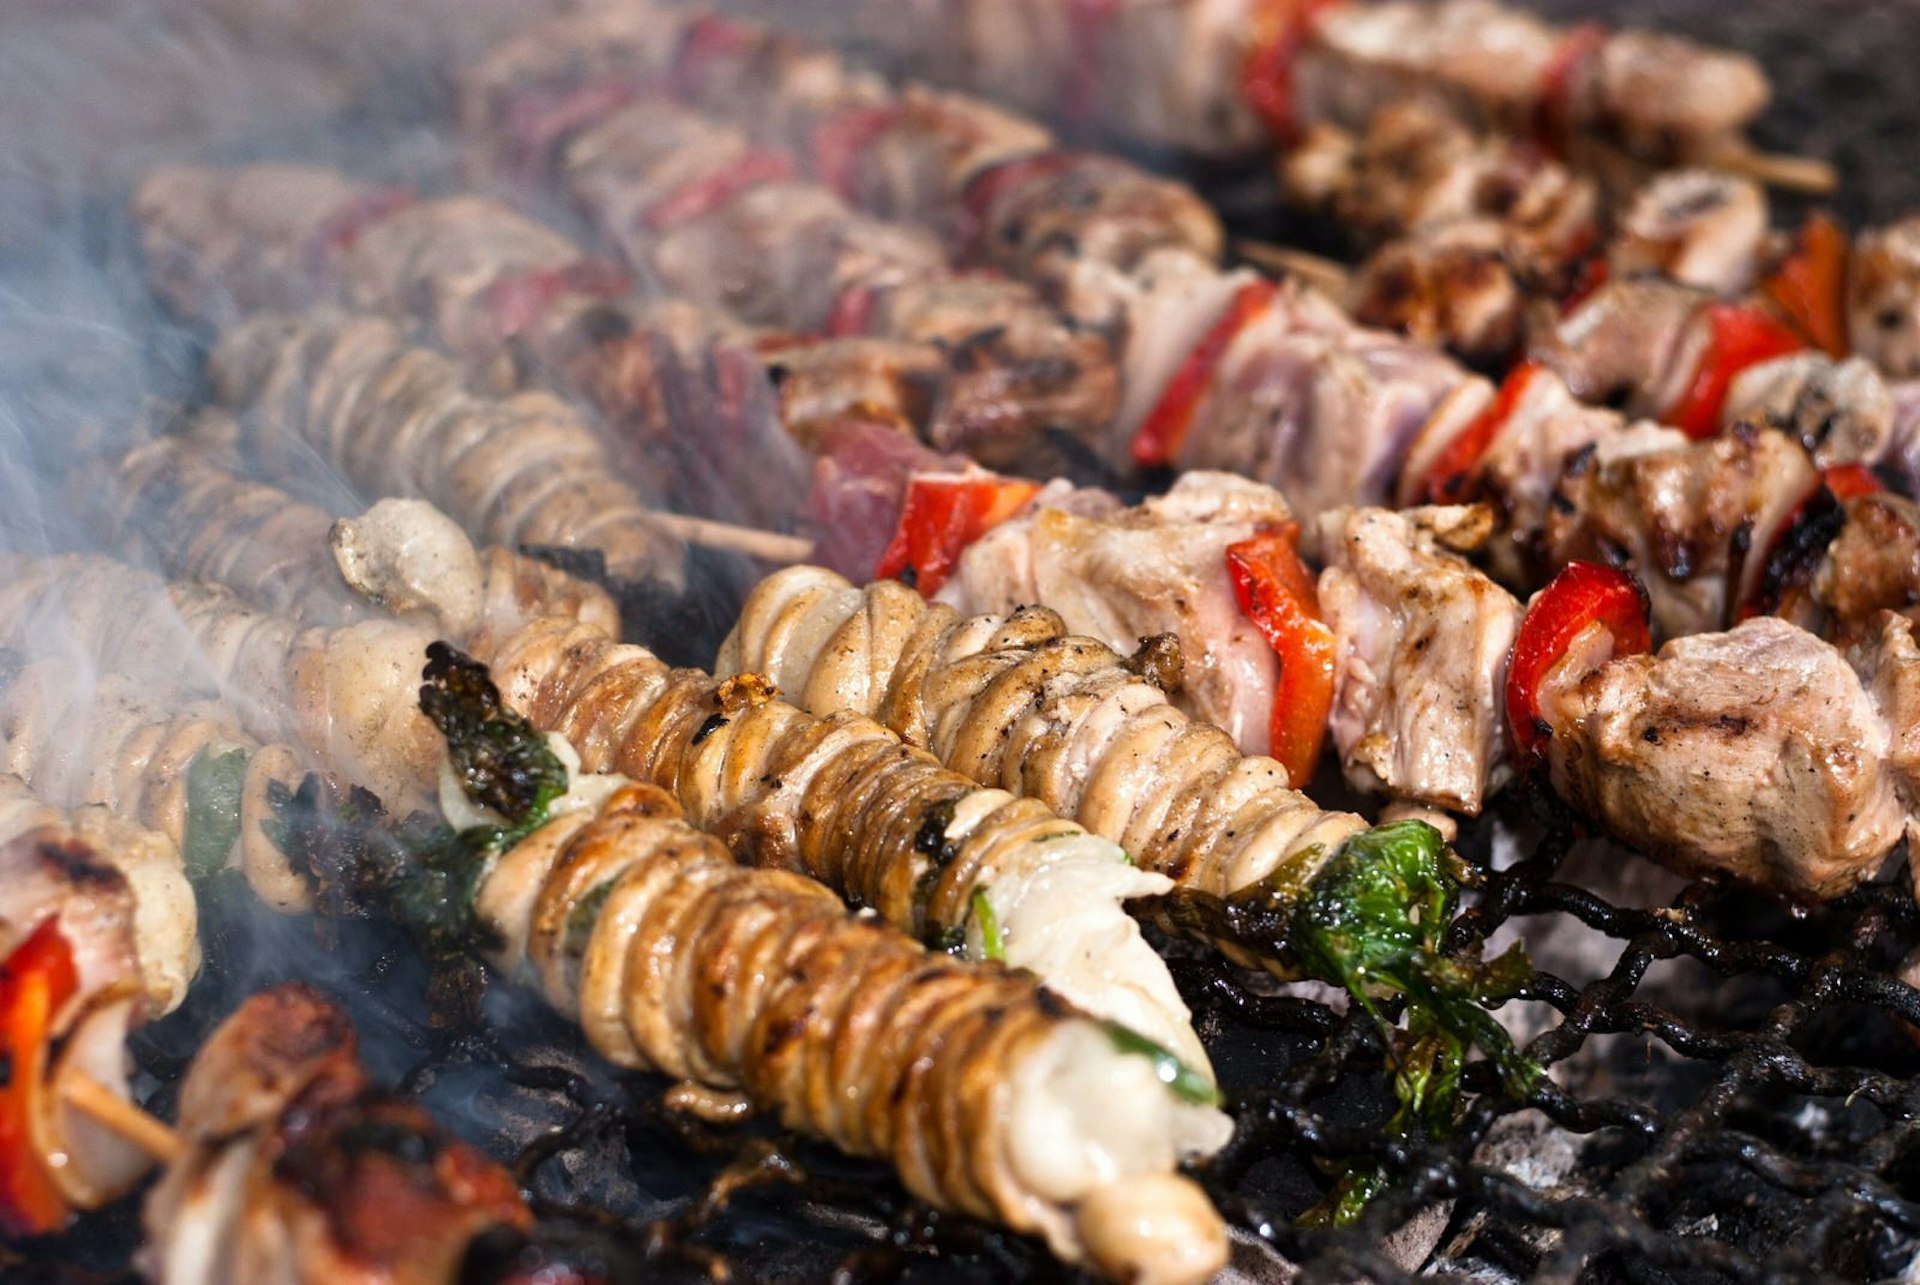 Stigghiole (intestines) on the grill © Gandolfo Cannatella / Shutterstock